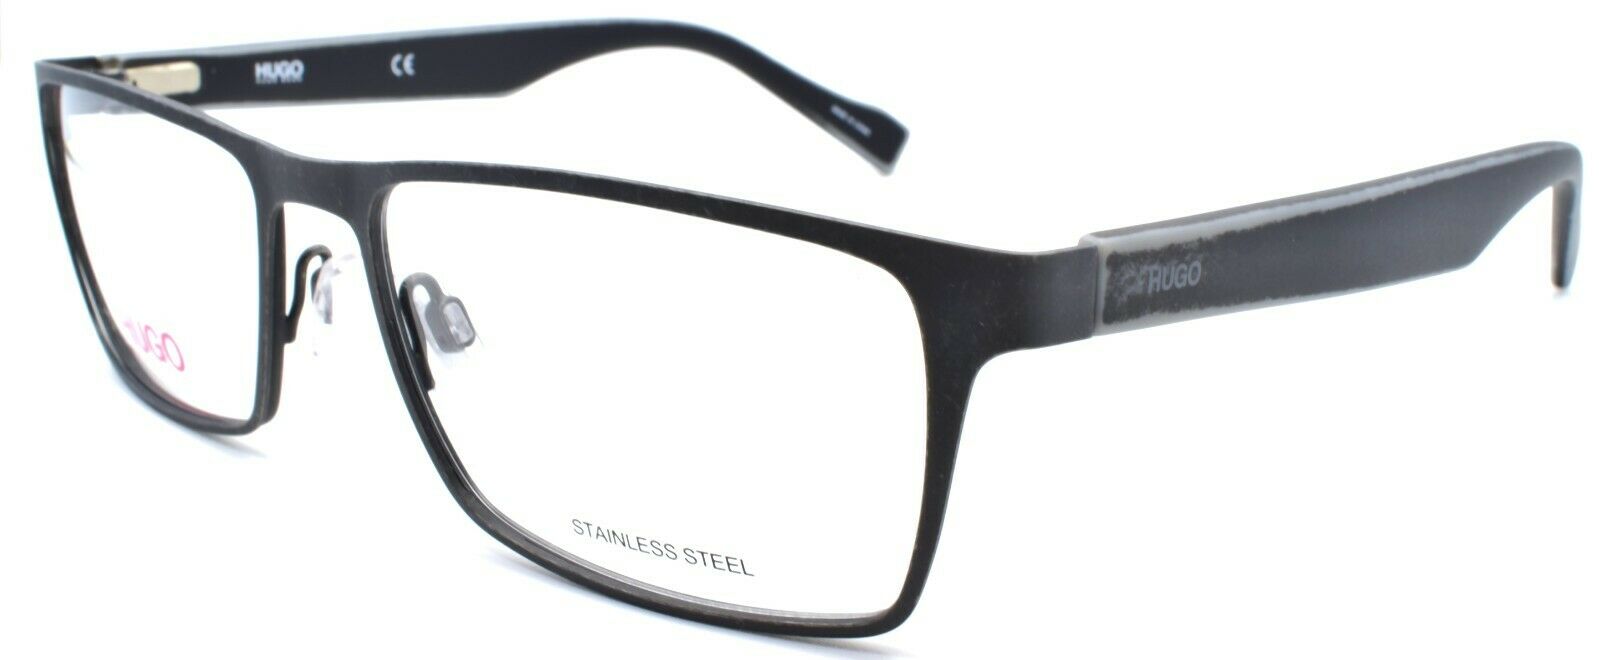 1-Hugo by Hugo Boss HG 0208 9H4 Men's Eyeglasses 55-16-140 Distressed Black / Gray-716736215341-IKSpecs